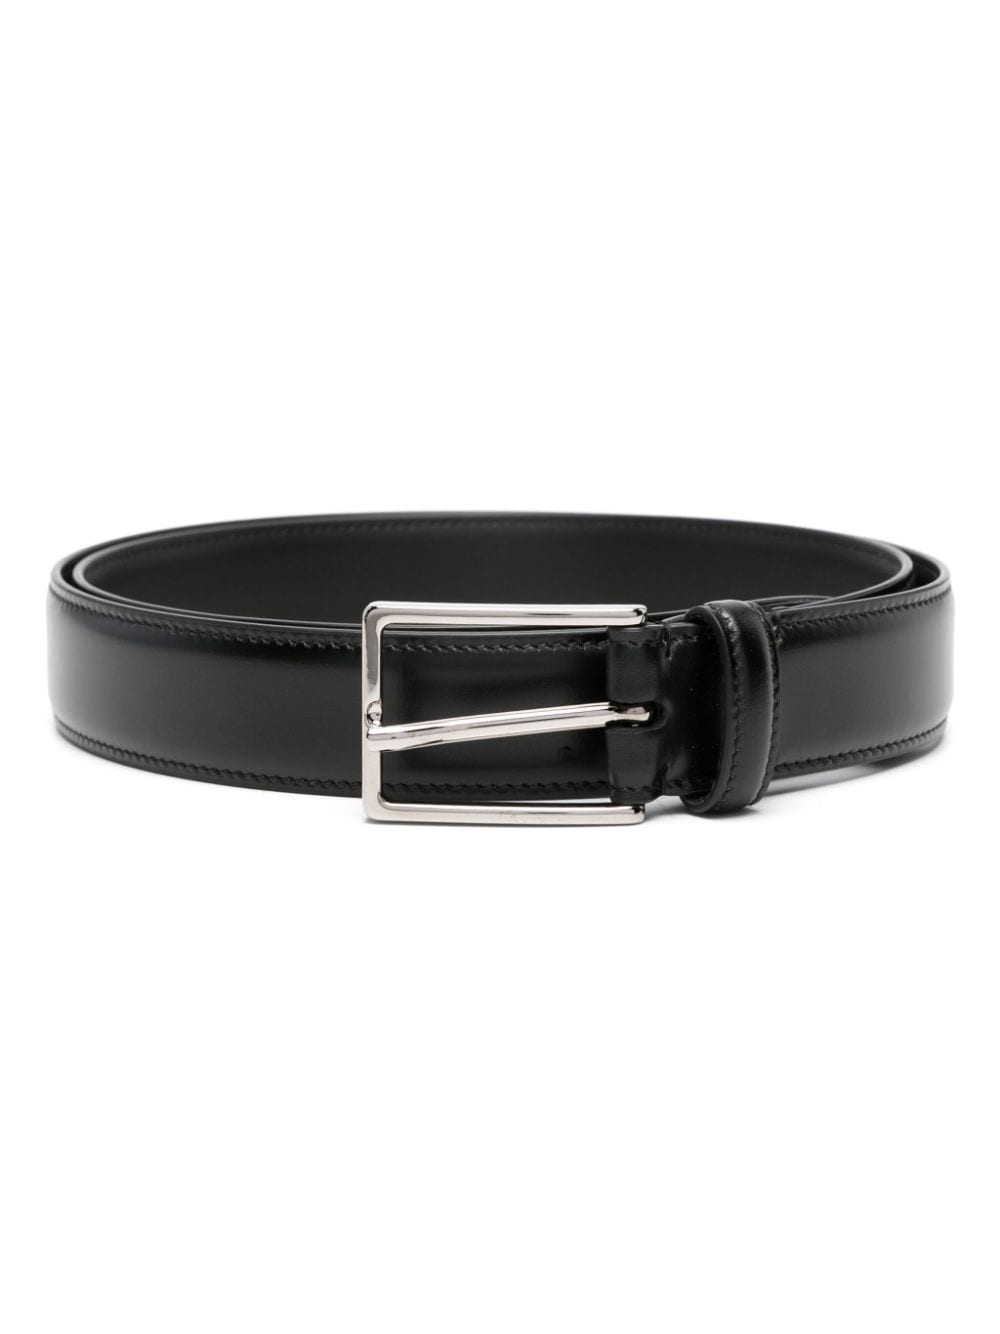 D4.0 buckled leather belt - Black von D4.0